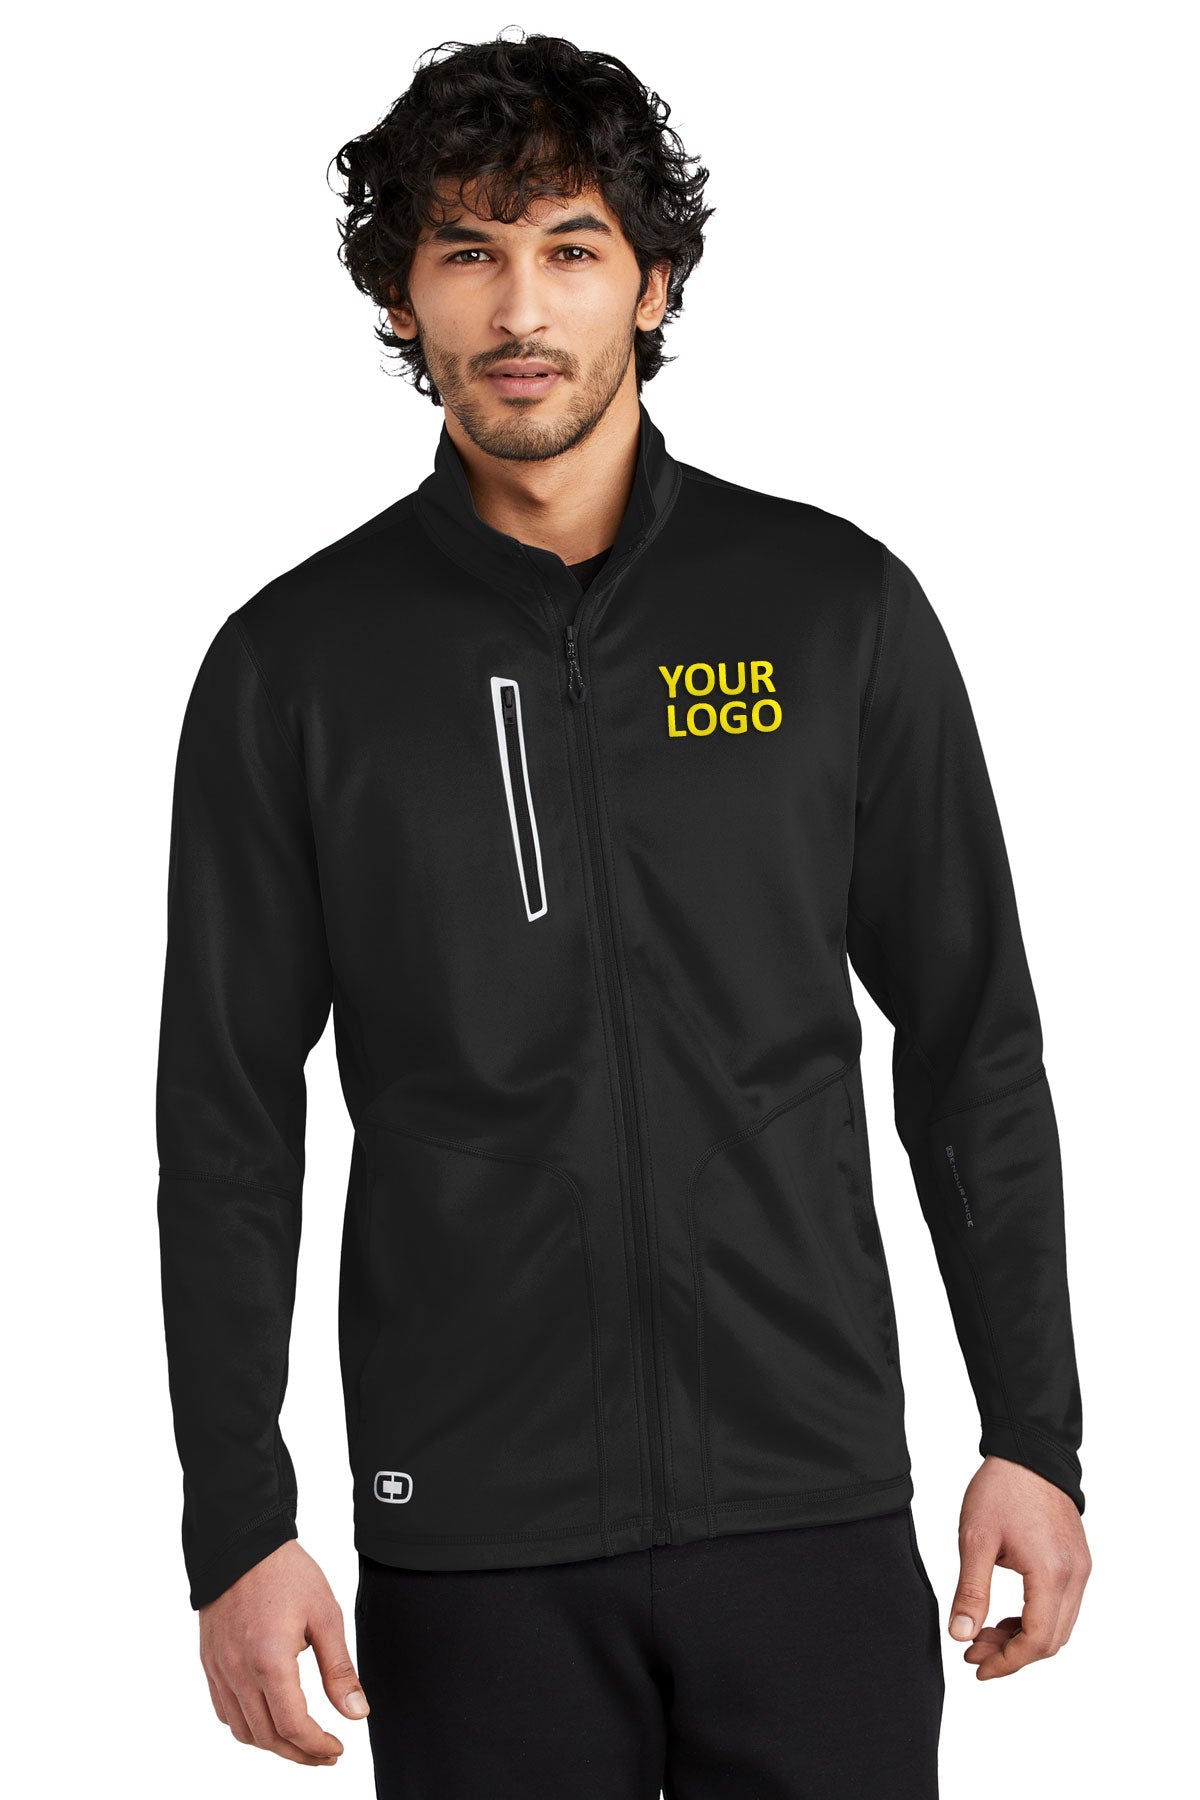 OGIO Endurance Blacktop OE700 company logo jackets